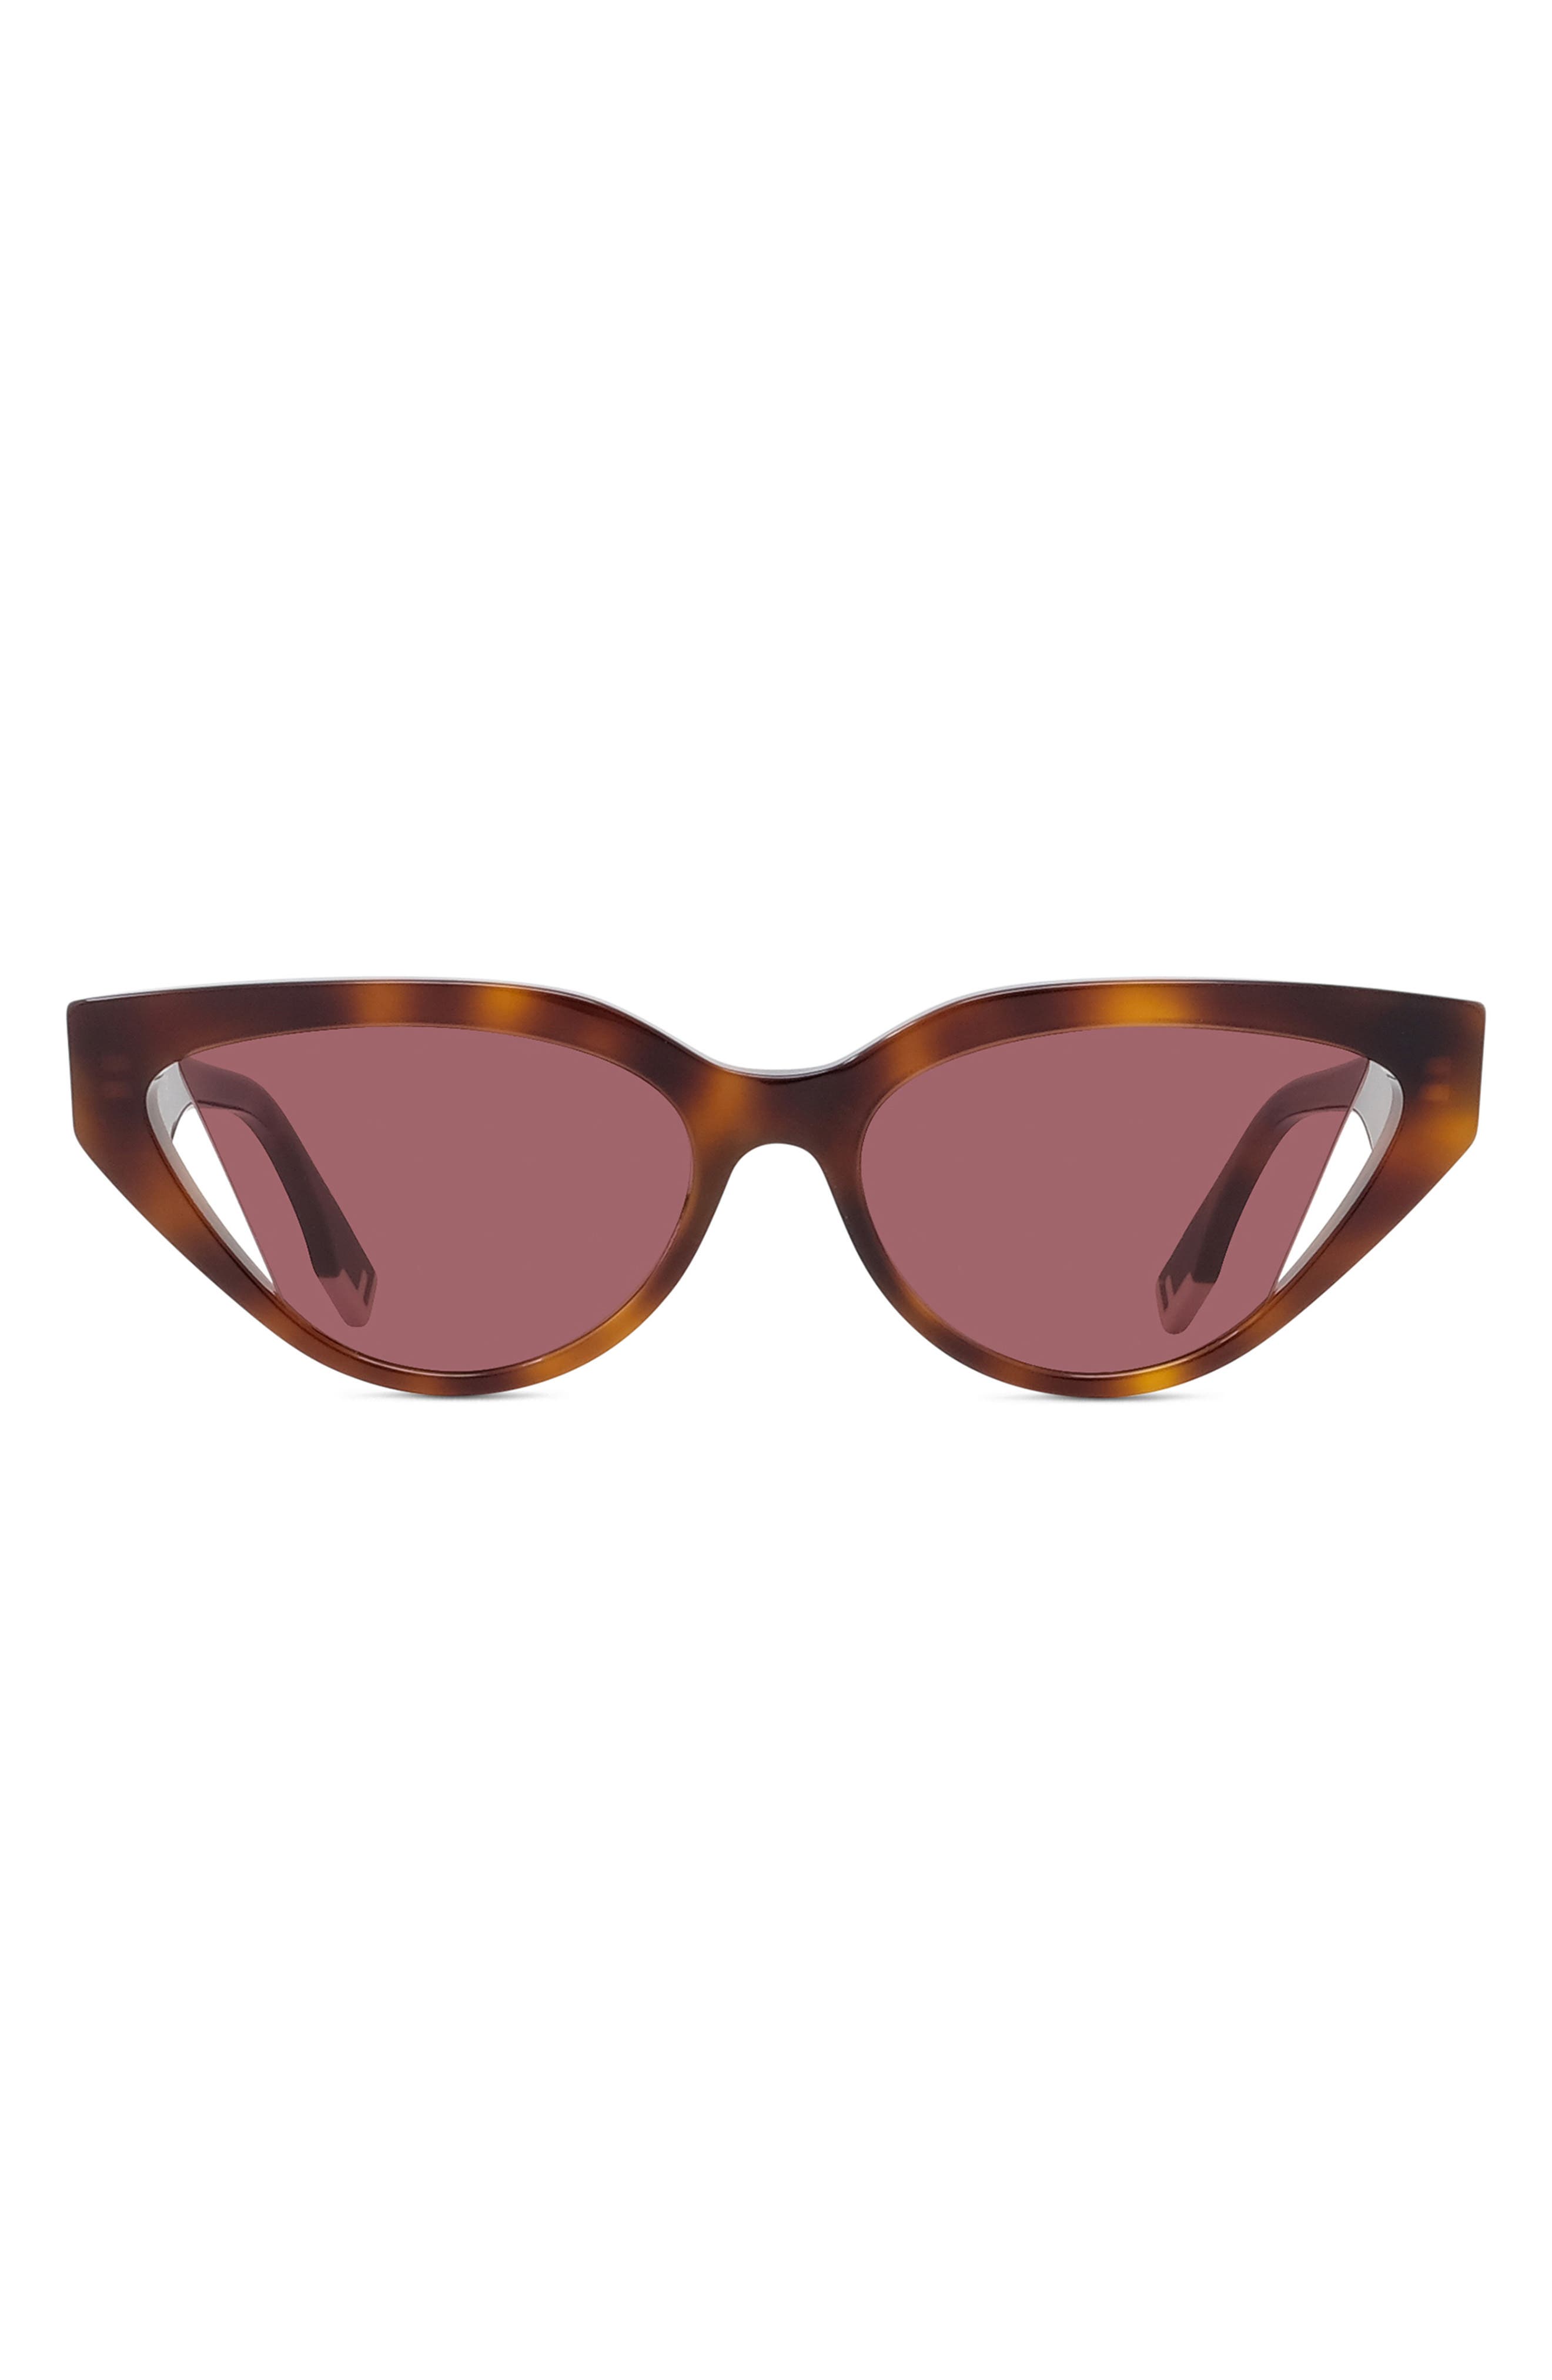 Fendi 52mm Cutout Cat Eye Sunglasses in Blonde Havana /Bordeaux at Nordstrom